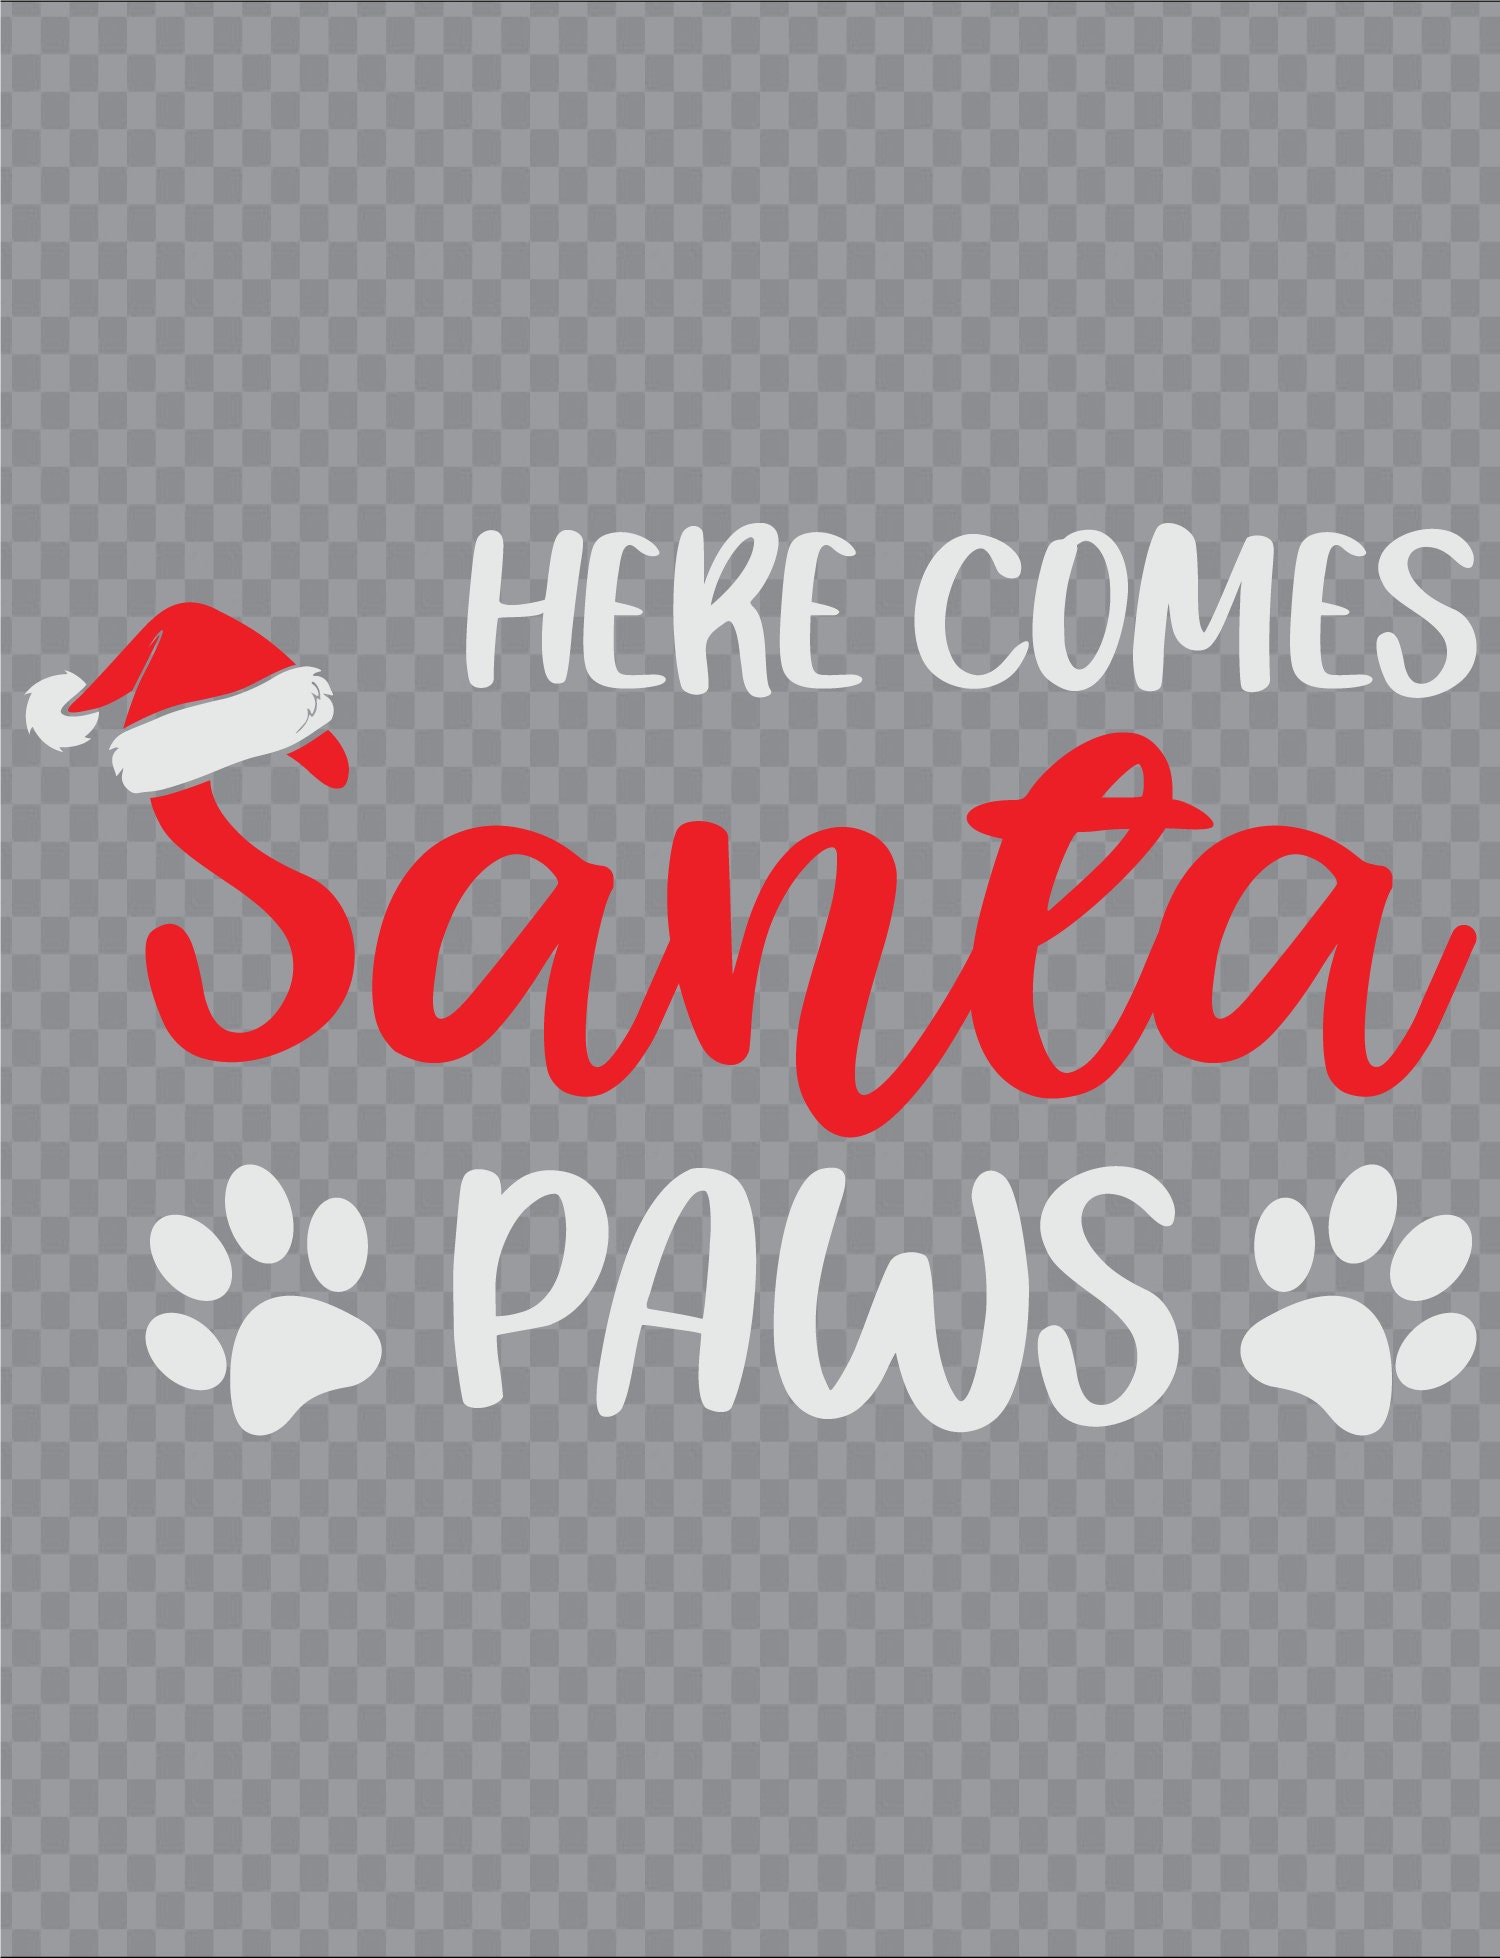 Here Comes Santa Paws: Christmas Holiday Pet | Etsy